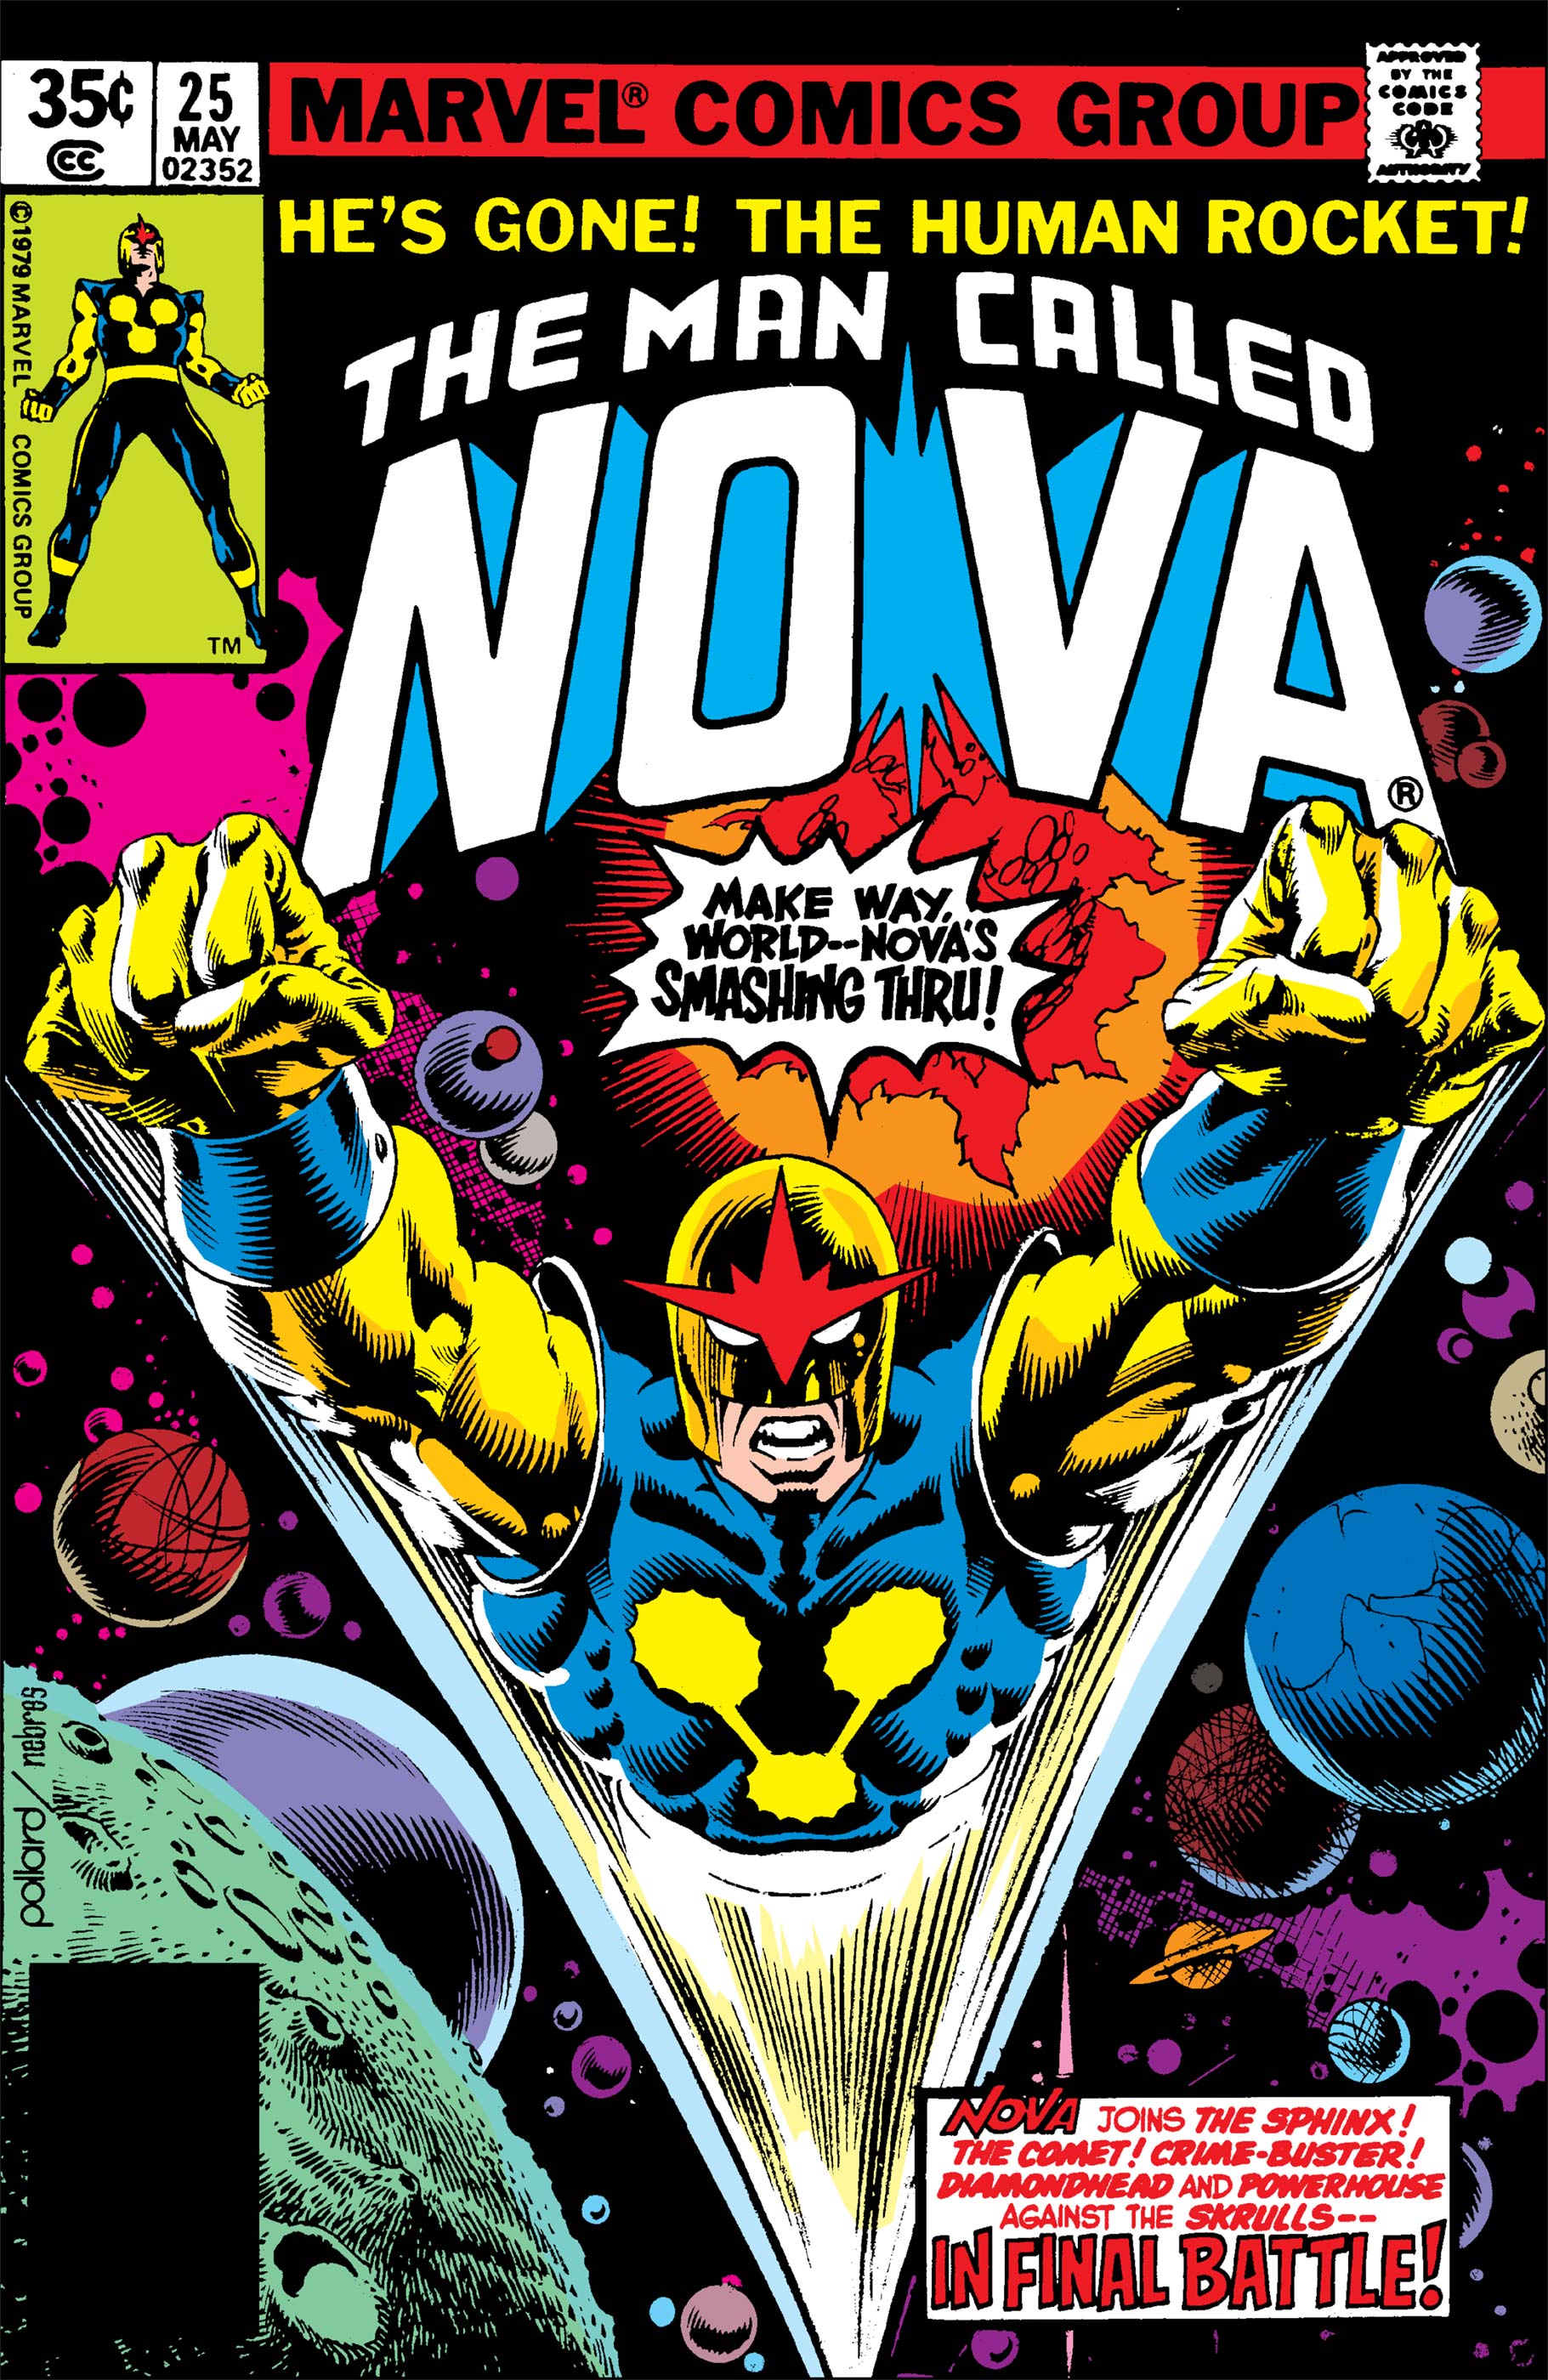 Nova (1976) #25